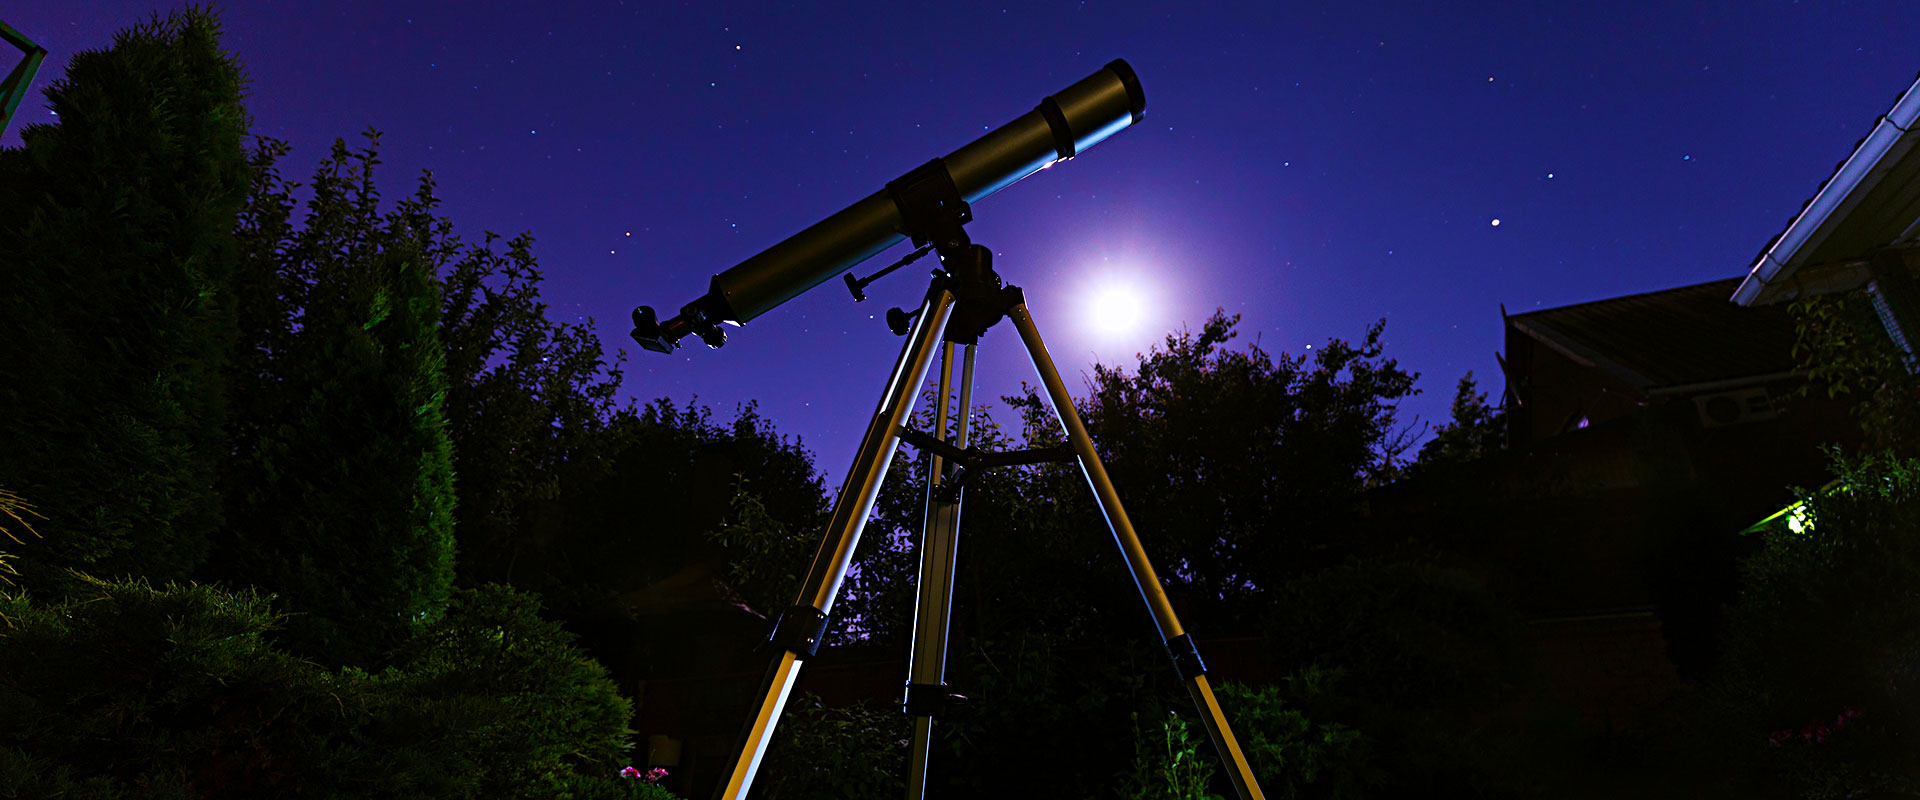 Backyard astronomy for beginners photo image